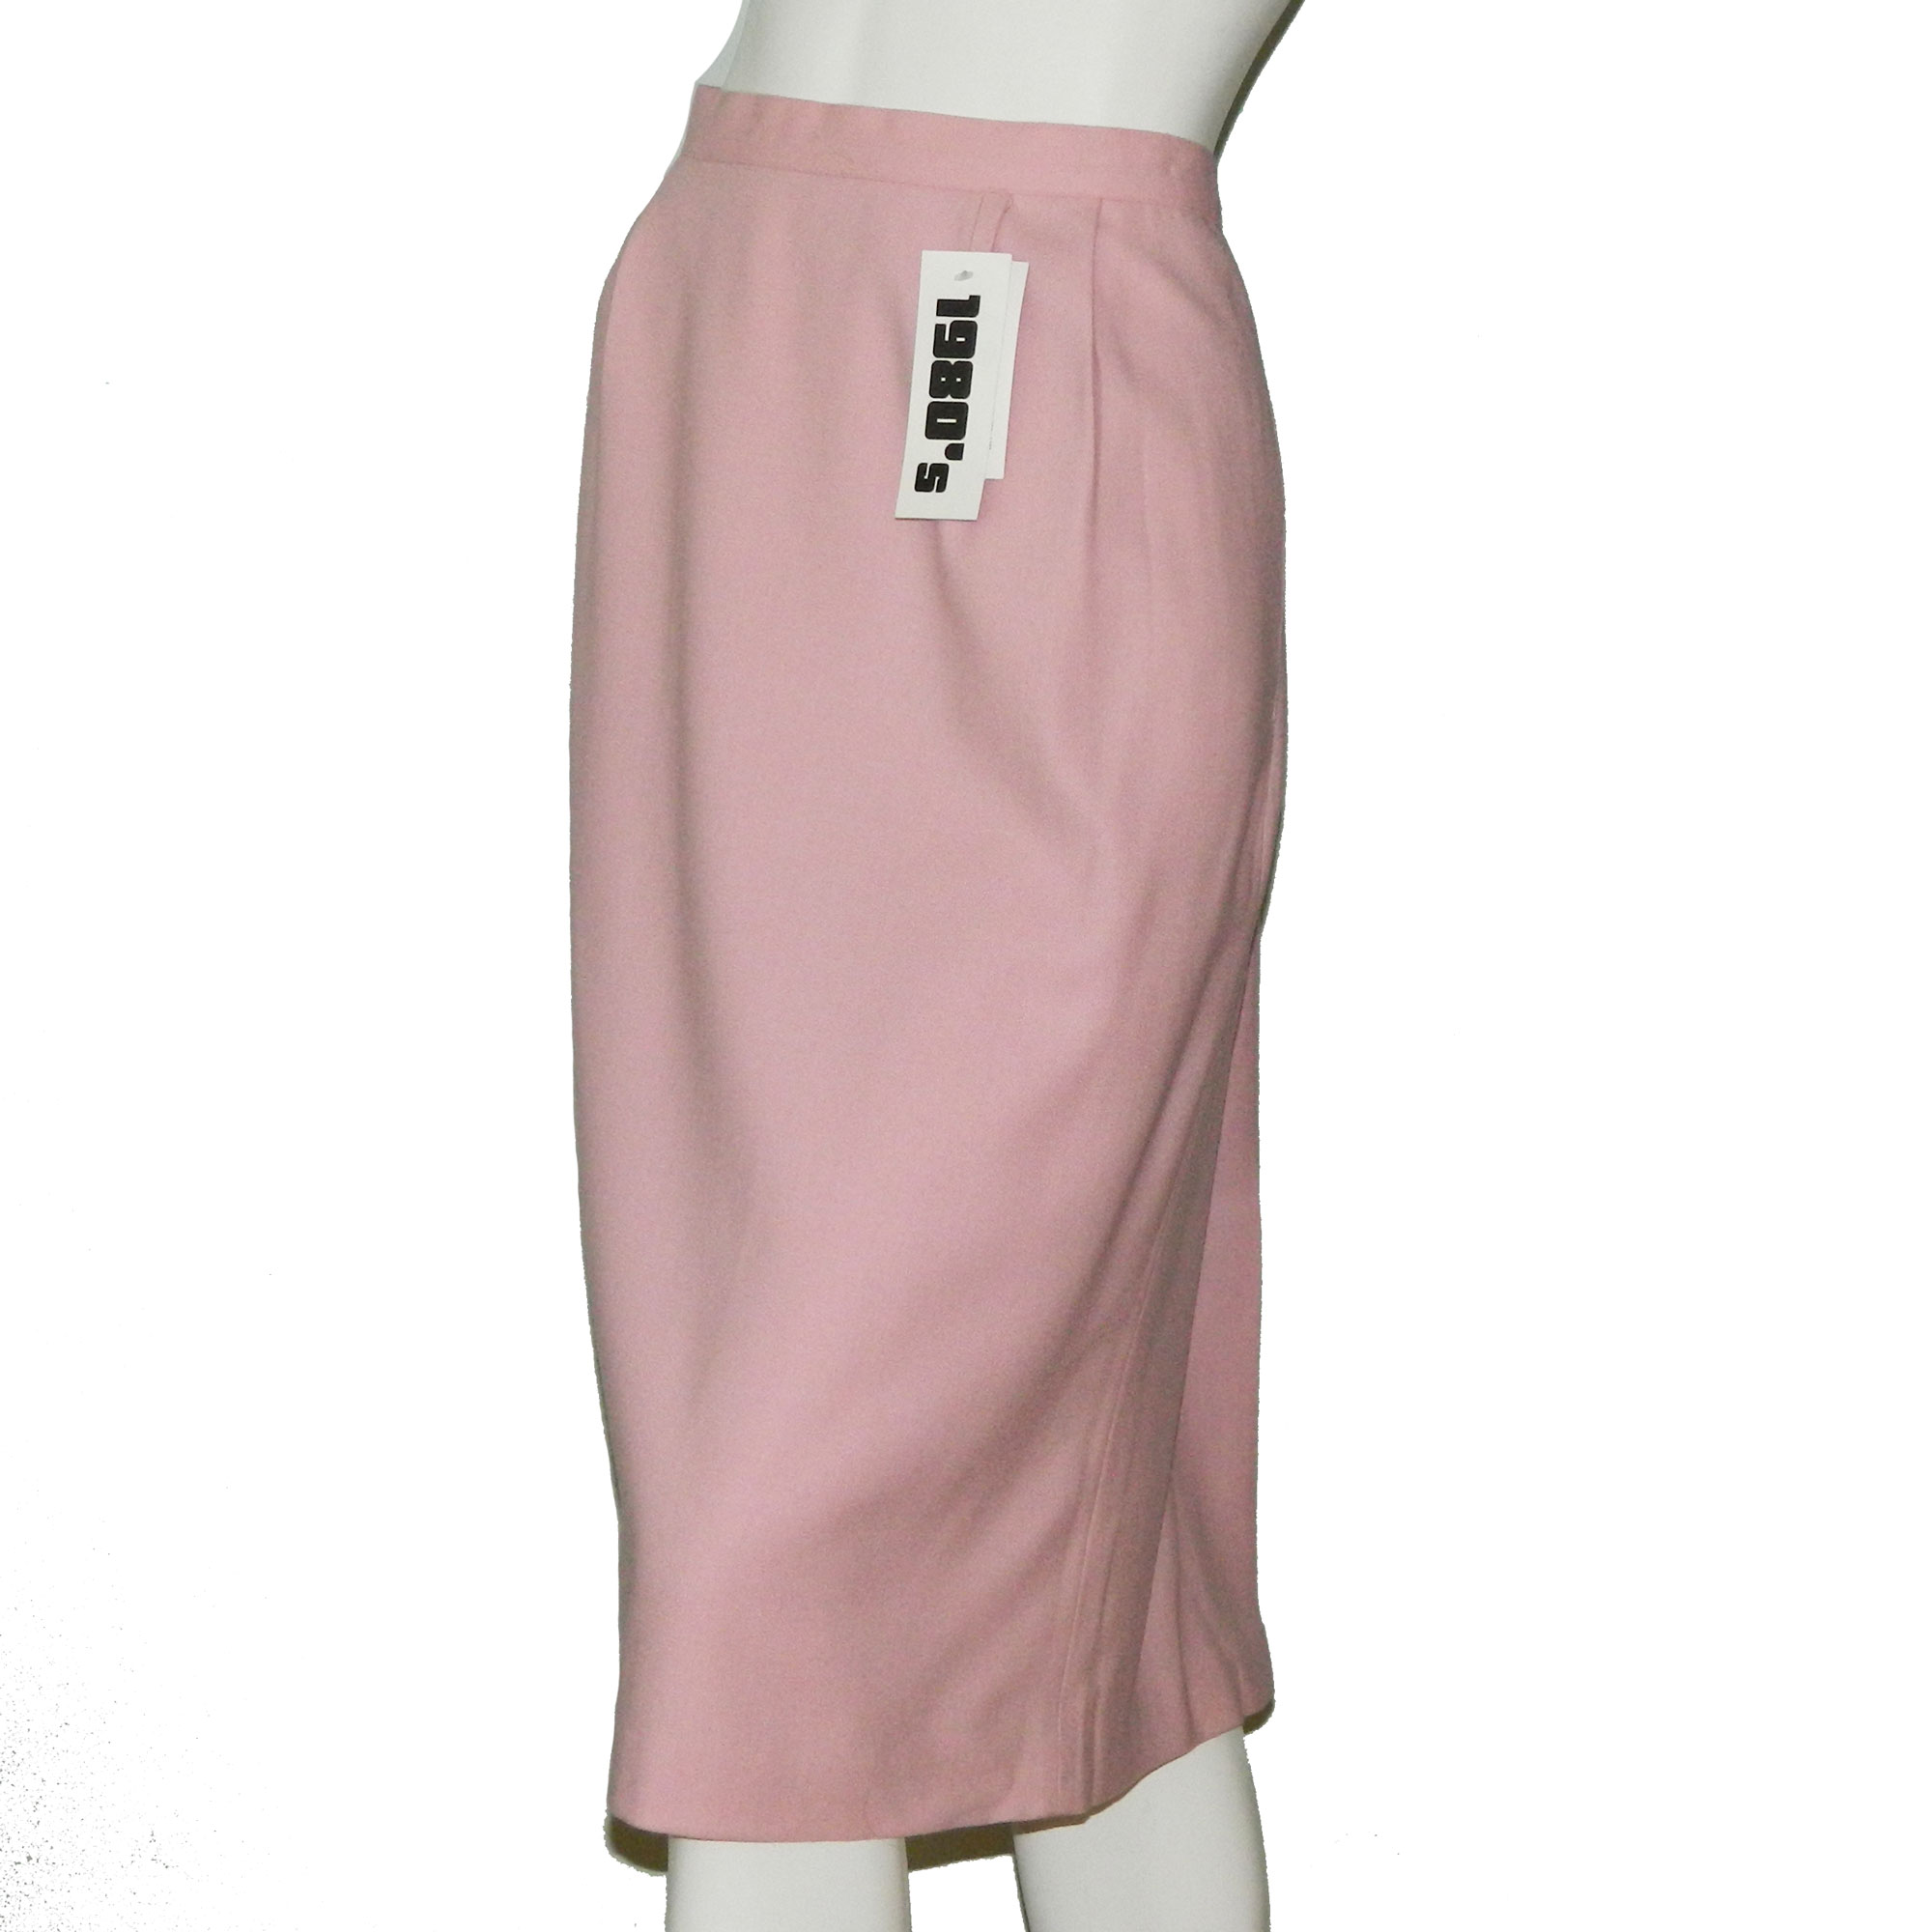 Pink Nolan Miller skirt